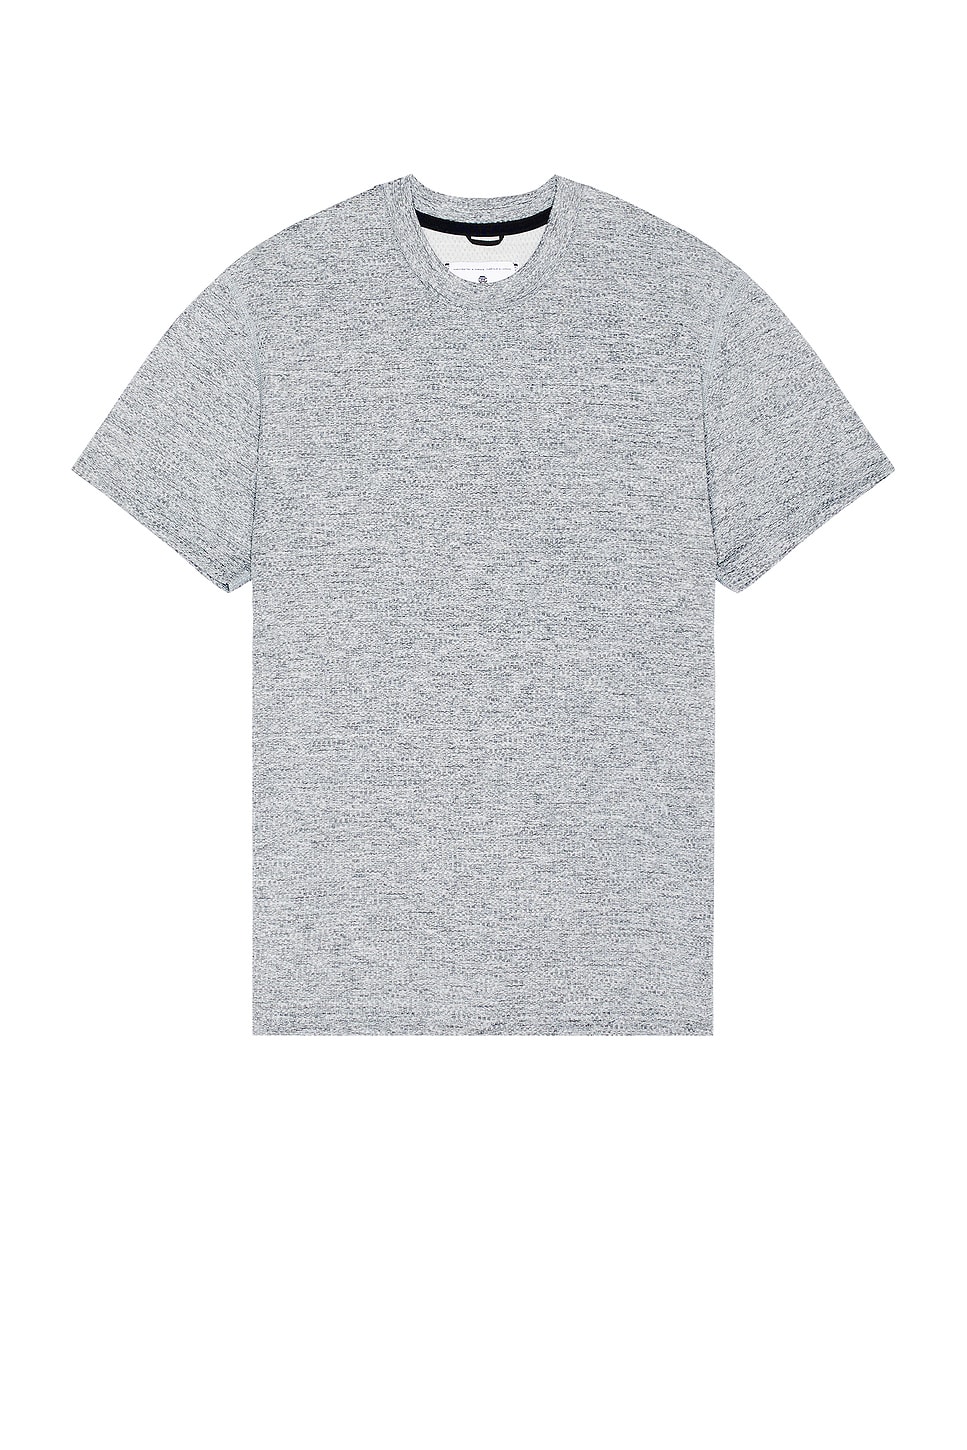 Solotex Mesh T-shirt in Grey